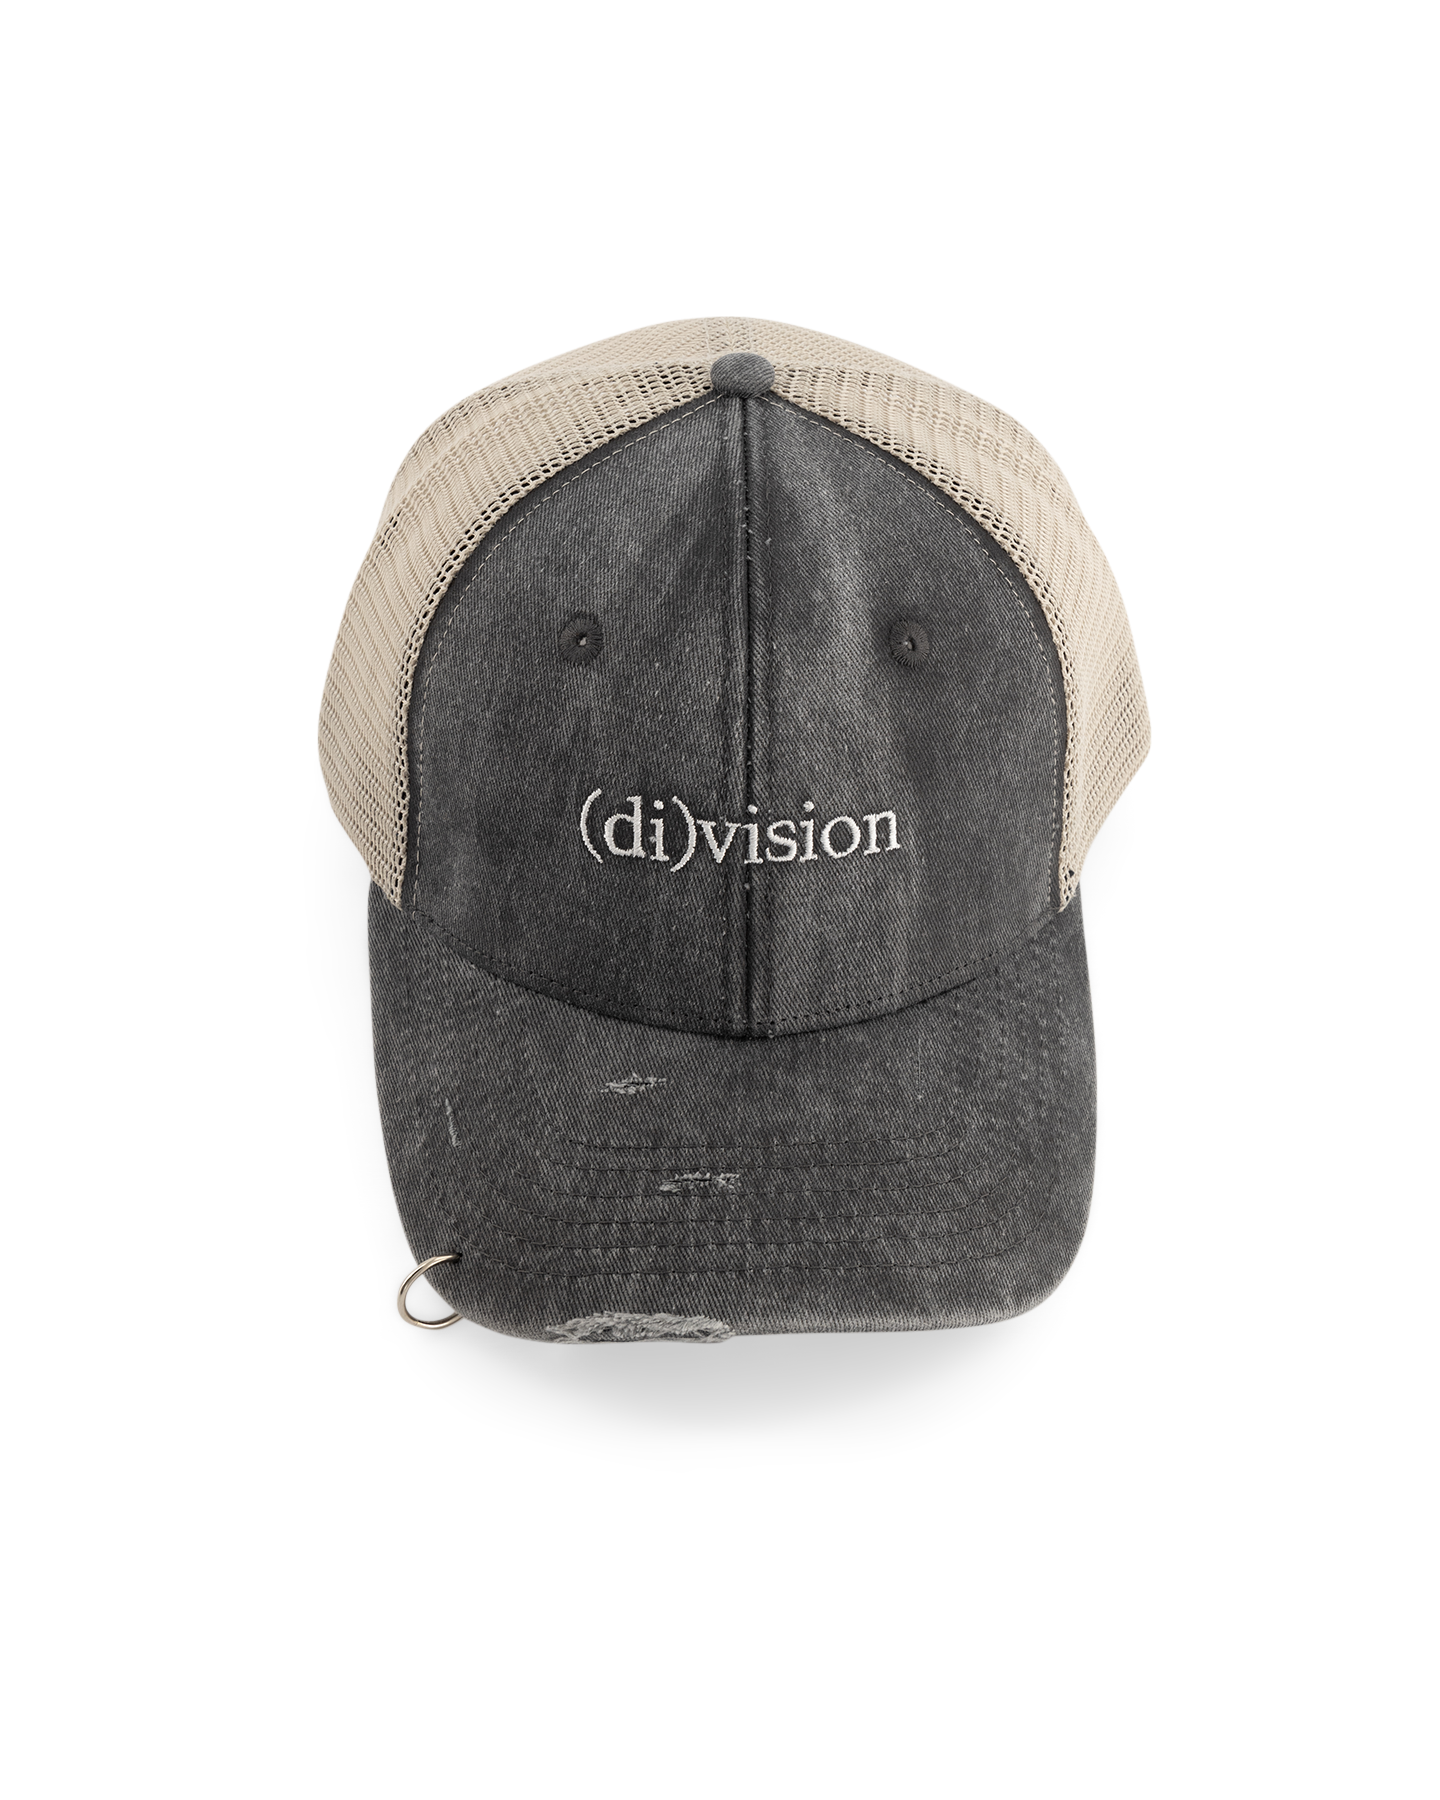 (di)vision (Di)Vision Logo Cap Washed Black ZWART 1